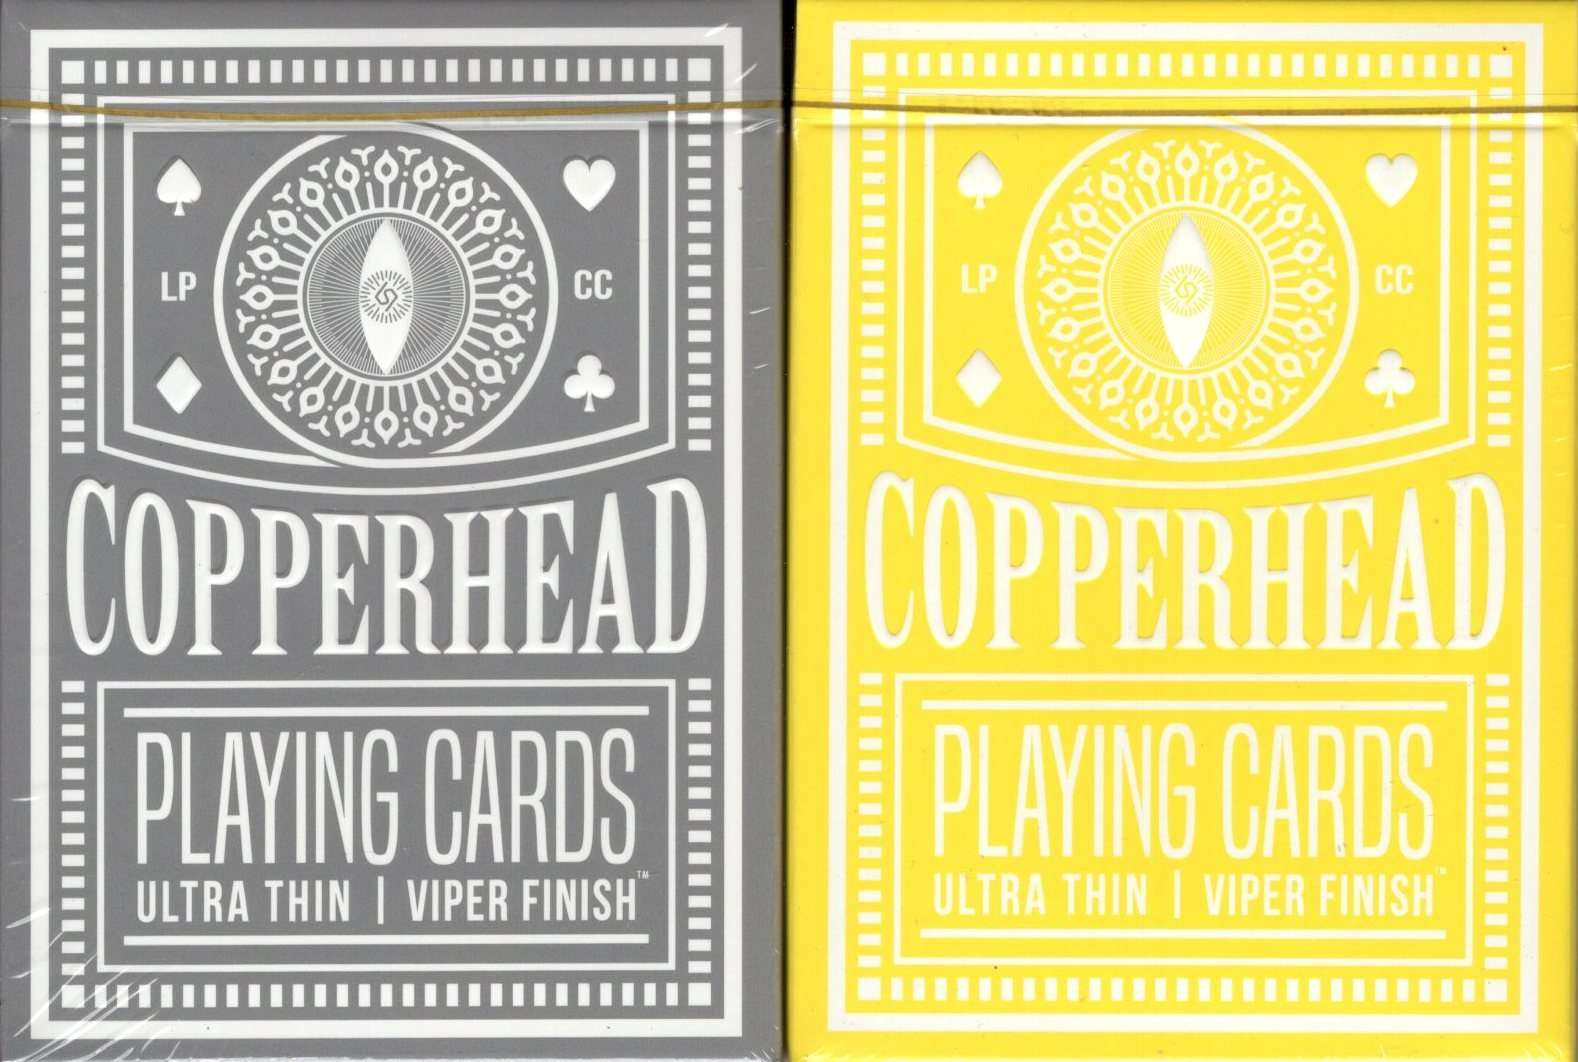 PlayingCardDecks.com-Copperhead v2 Viper Finish Playing Cards LPCC